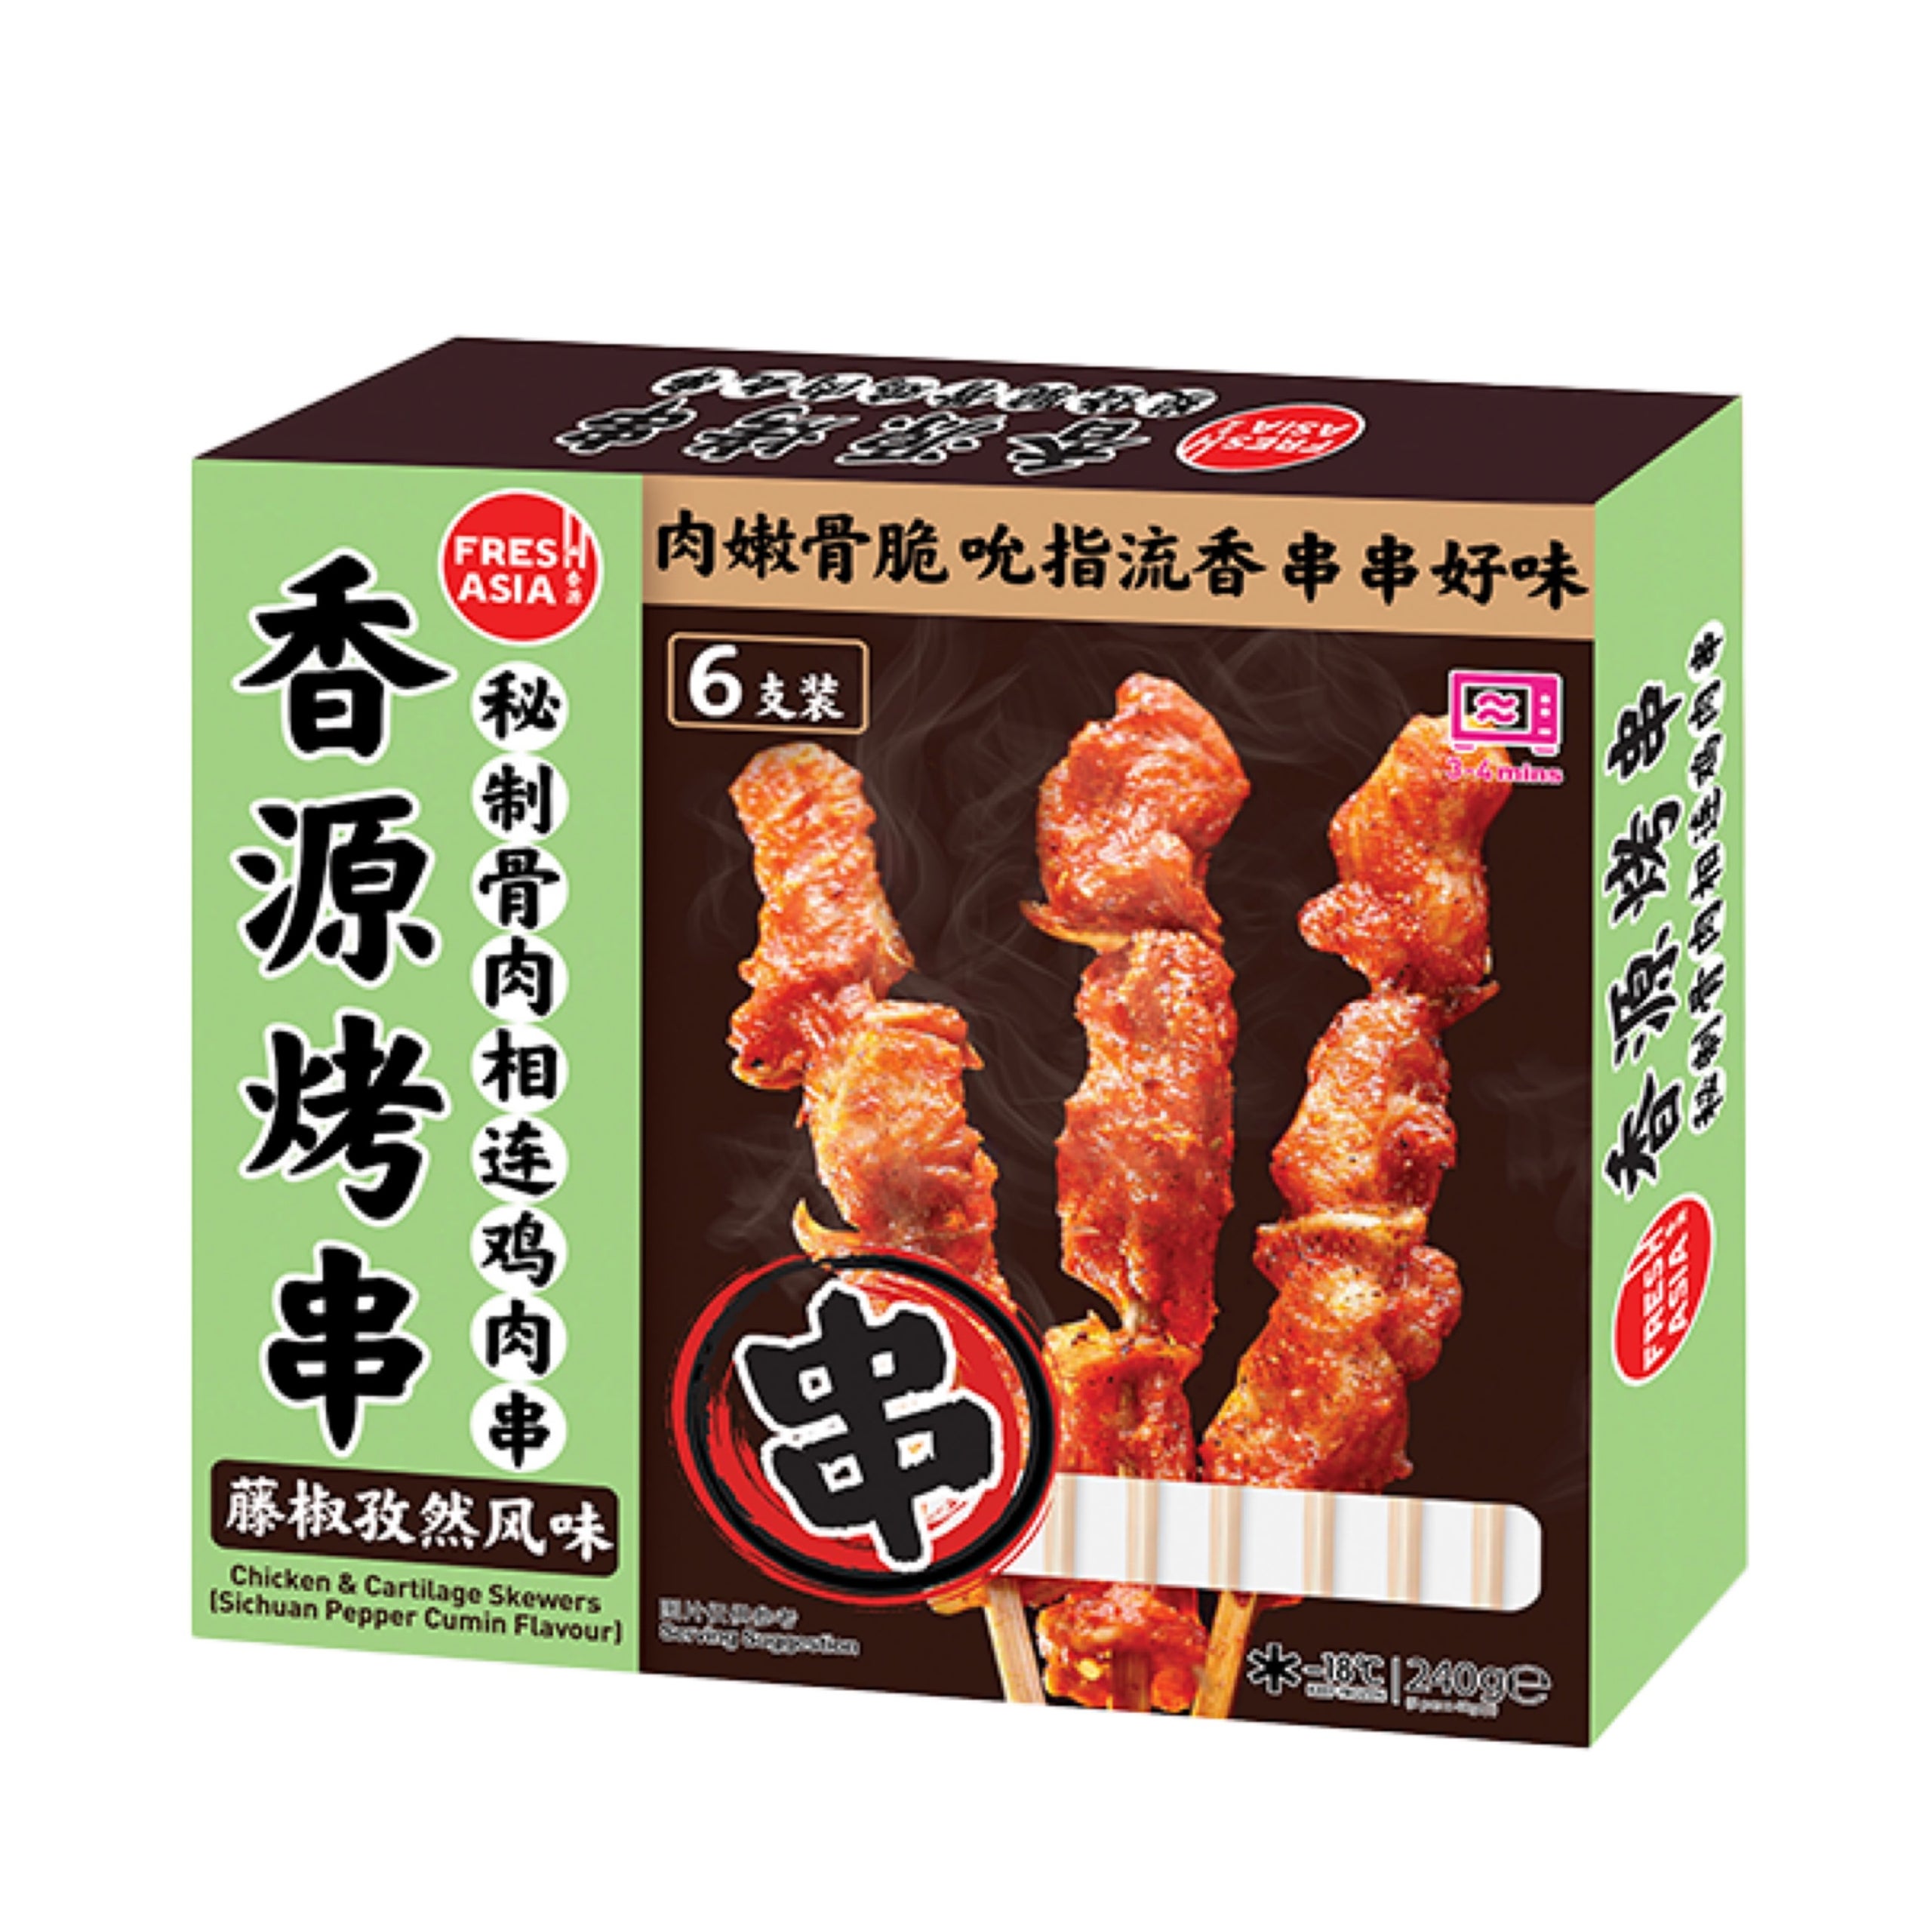 香源 秘制骨肉相连-藤椒孜然*240g Freshasia Chicken and Cartilage Skewers-Sichuan Pepper  Cumin